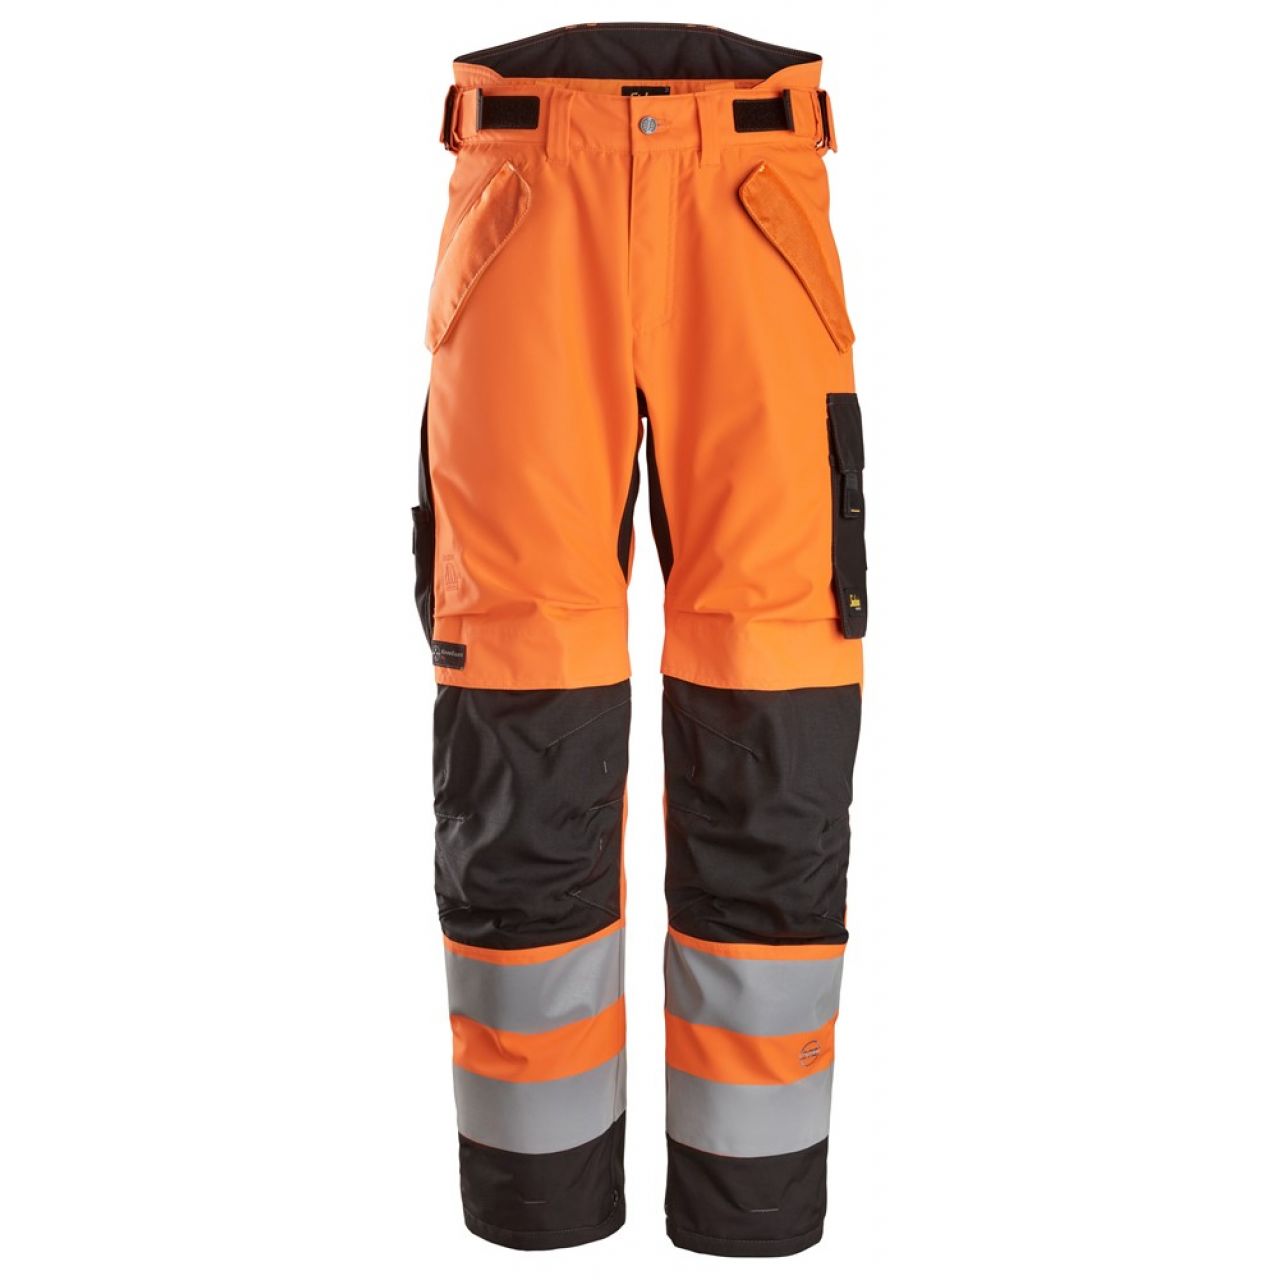 6630 Pantalones largos de trabajo impermeables de alta visibilidad clase 2 acolchados con doble capa 37.5® naranja-negro talla L